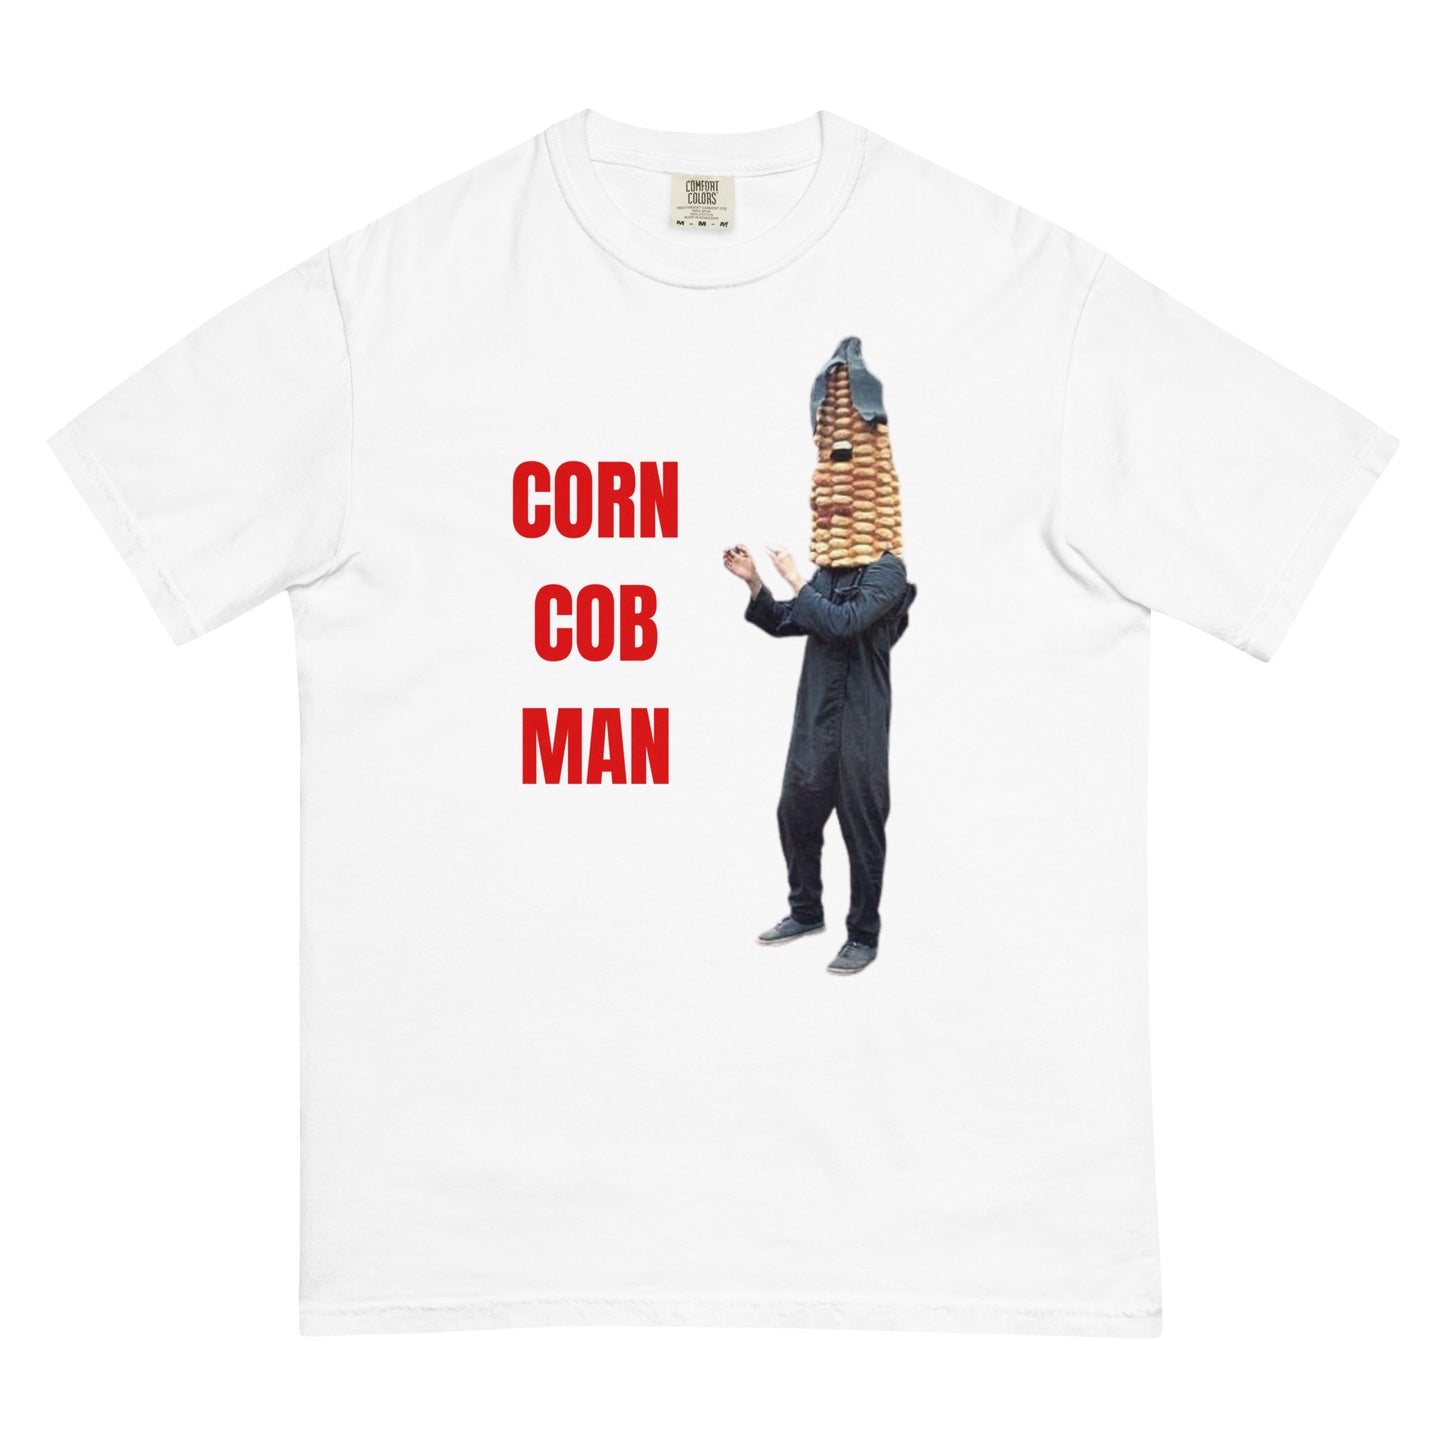 Corn Cob Man T-shirt